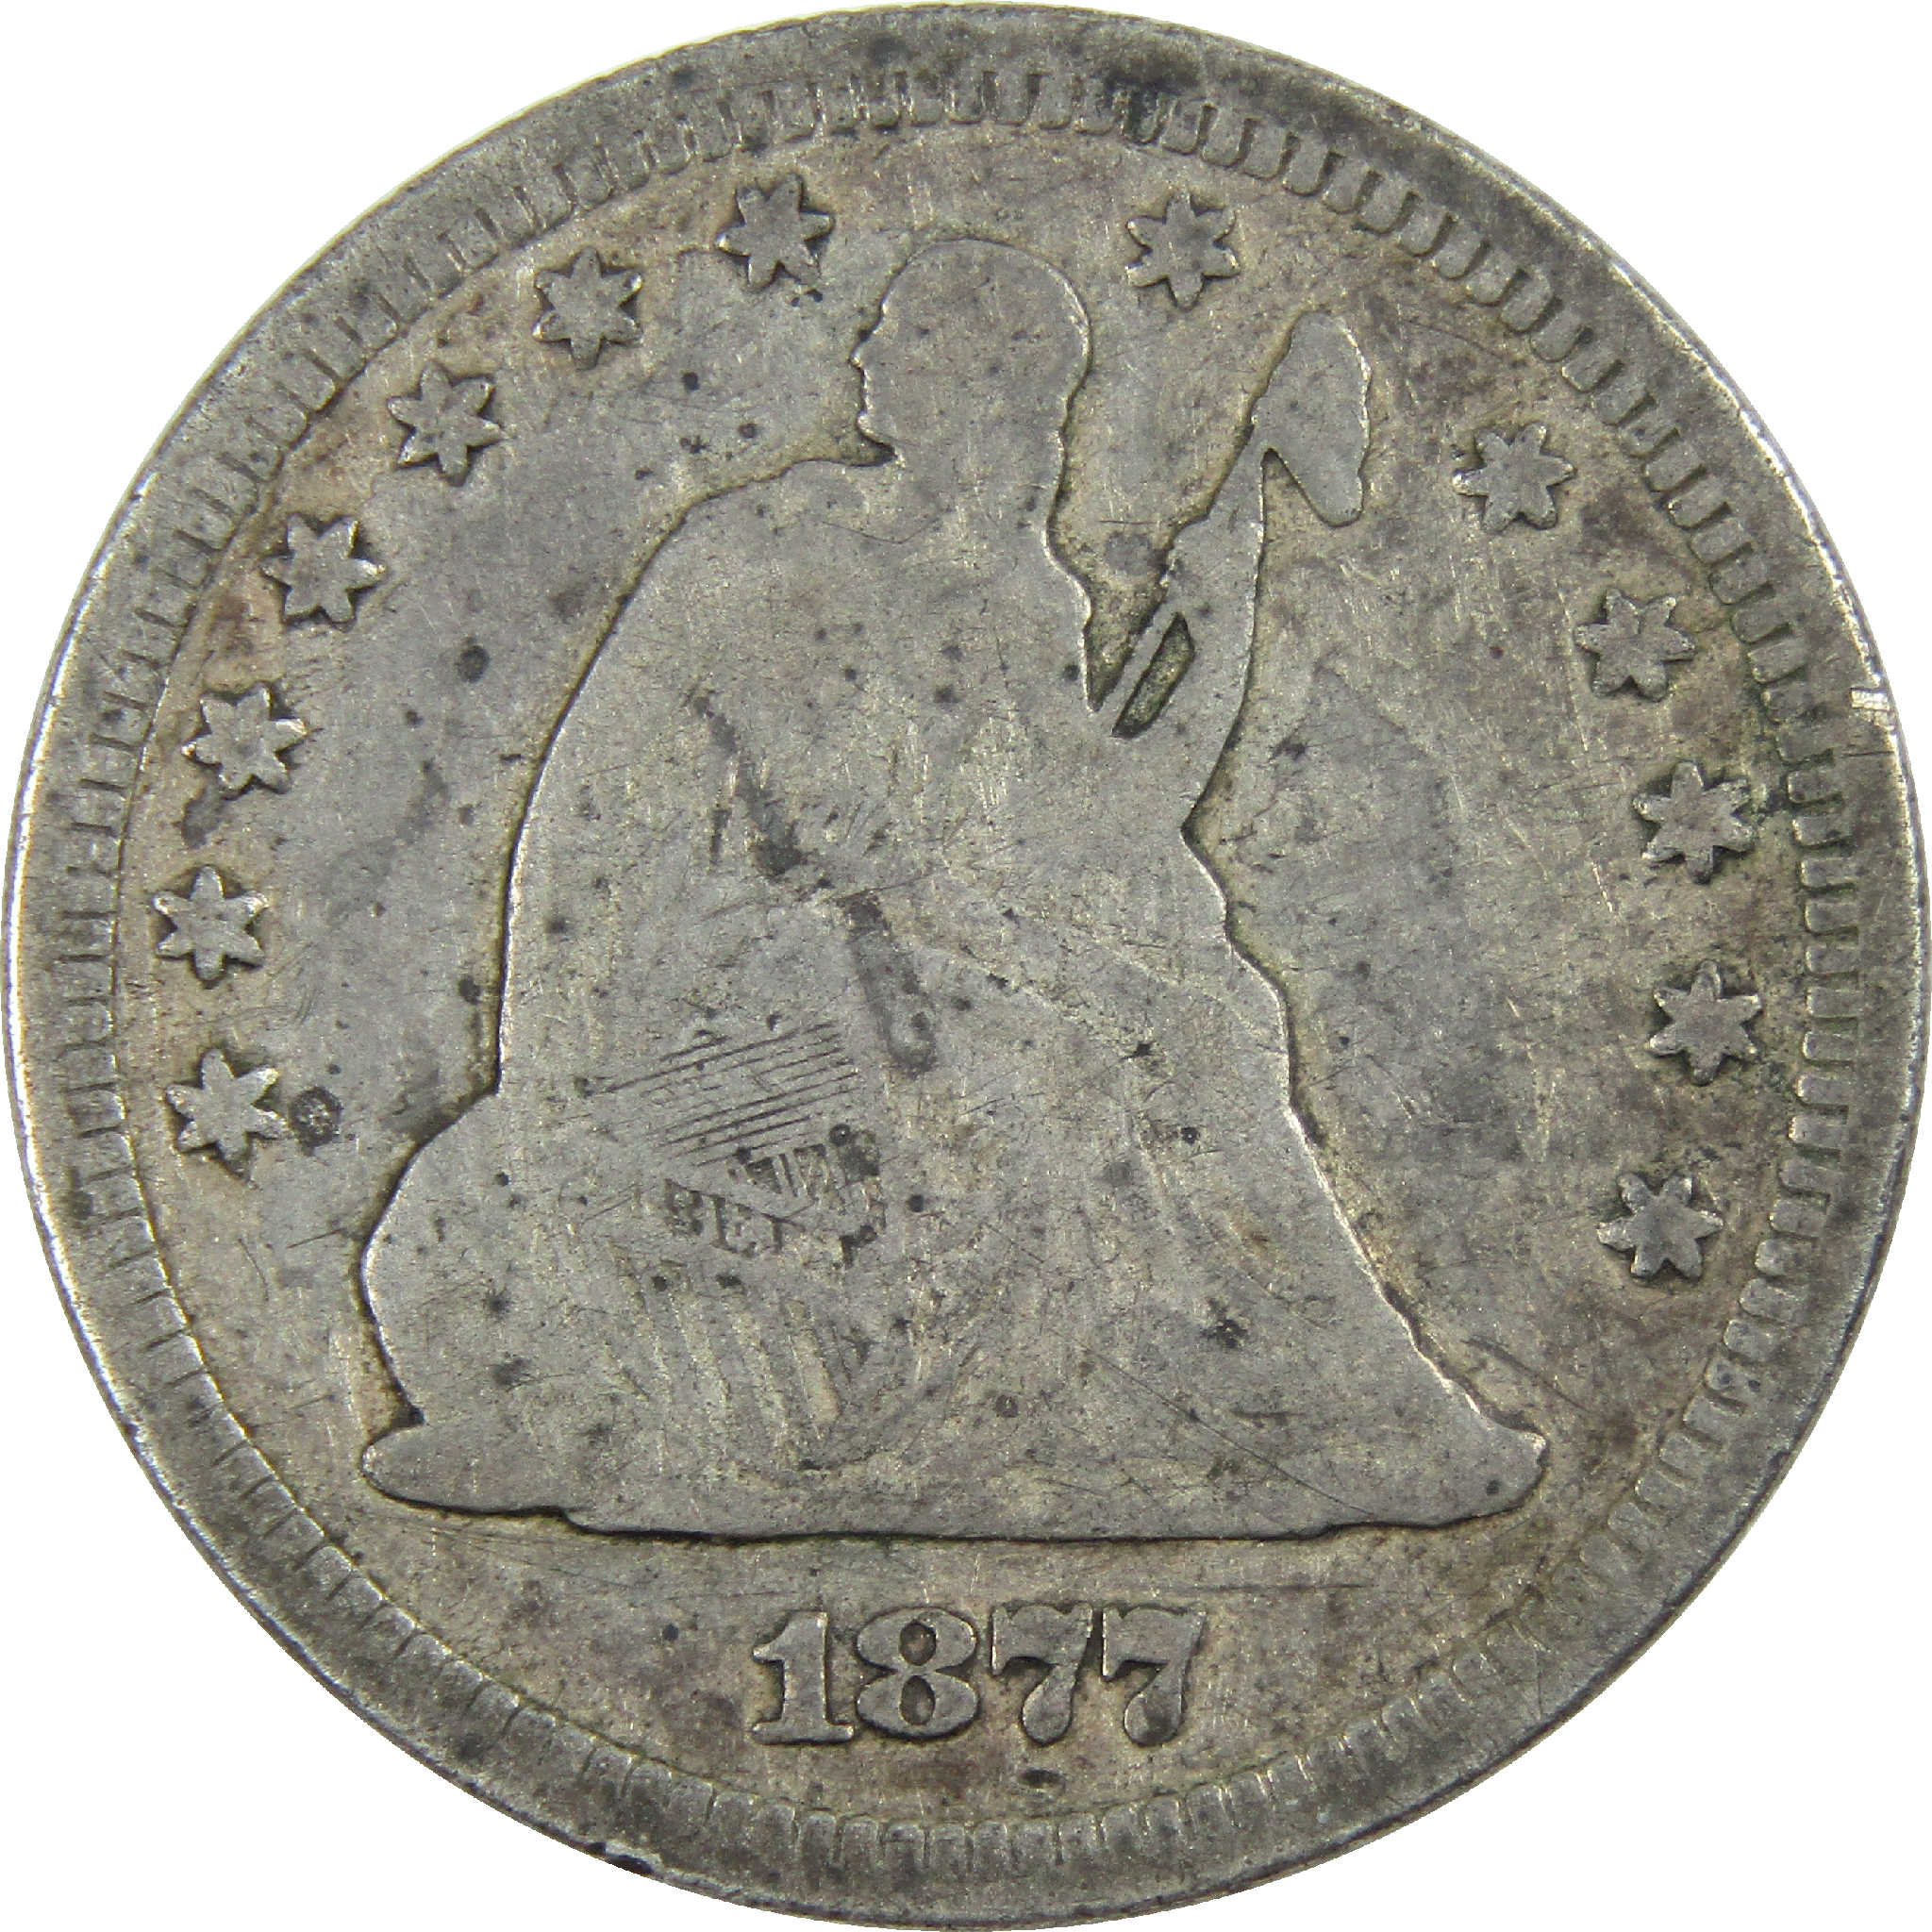 1877 Seated Liberty Quarter VG Very Good Details Silver 25c SKU:I12288